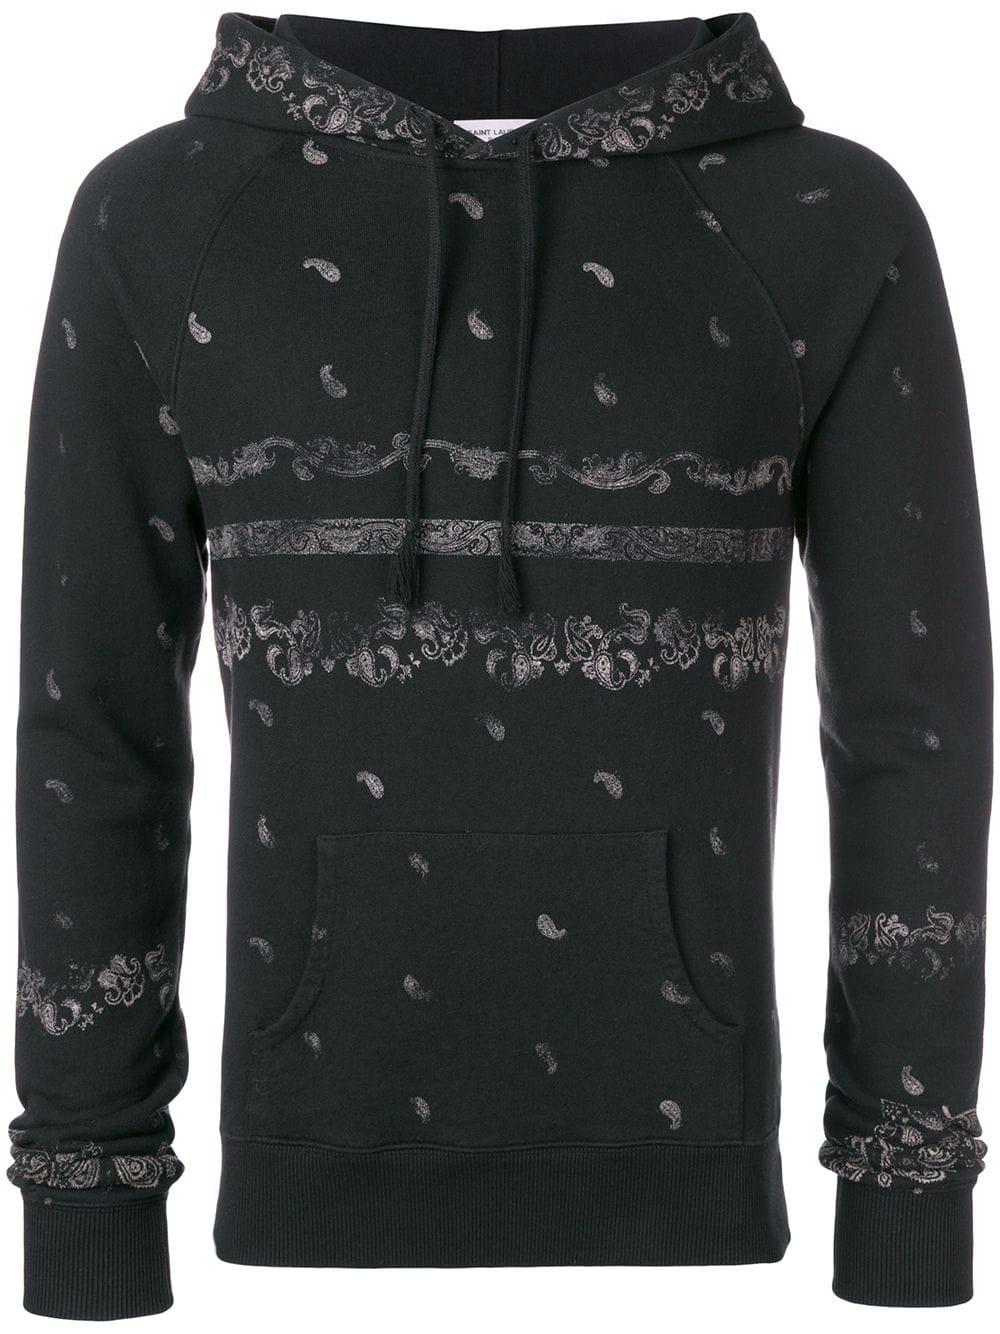 Saint Laurent Cotton Paisley Hoodie in Black for Men - Lyst